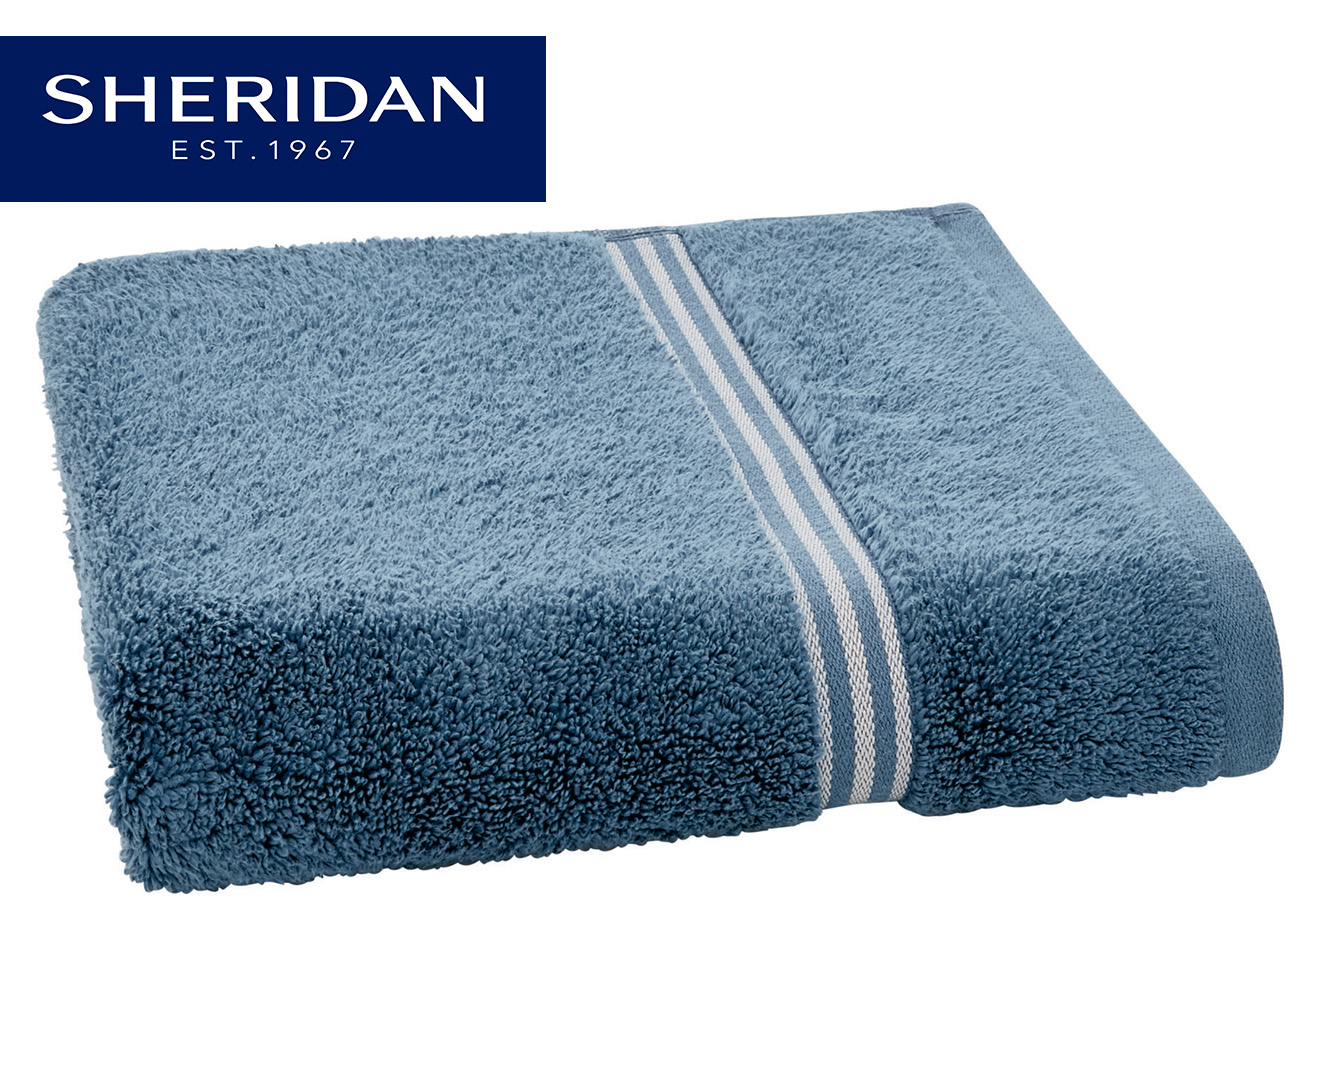 Sheridan Gym Towel - Indigo